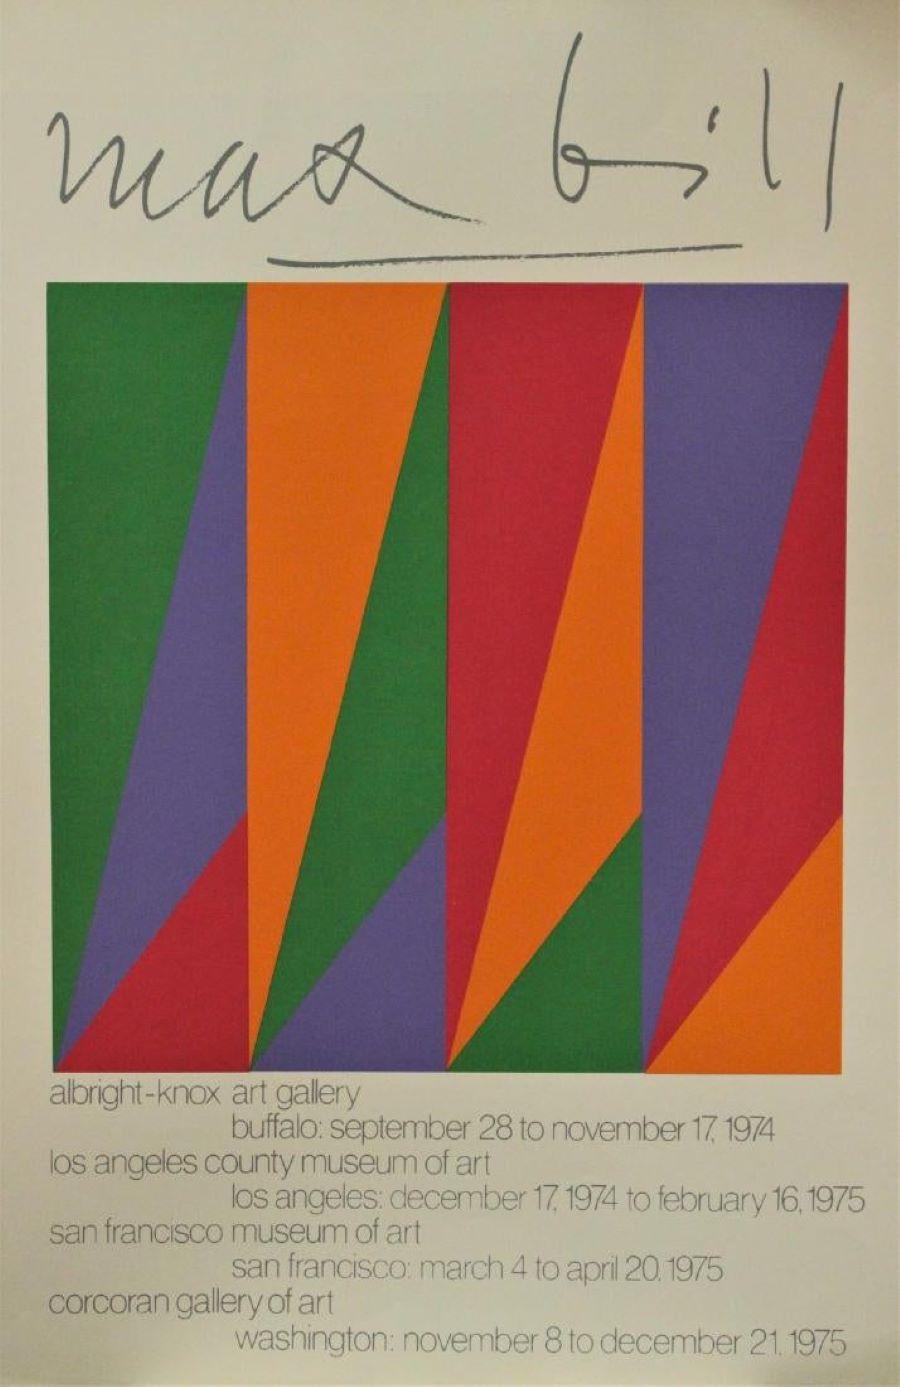 Max Bill Print - Albright-Knox Art Gallery, Buffalo: September 28 to November 17, 1974 Poster 